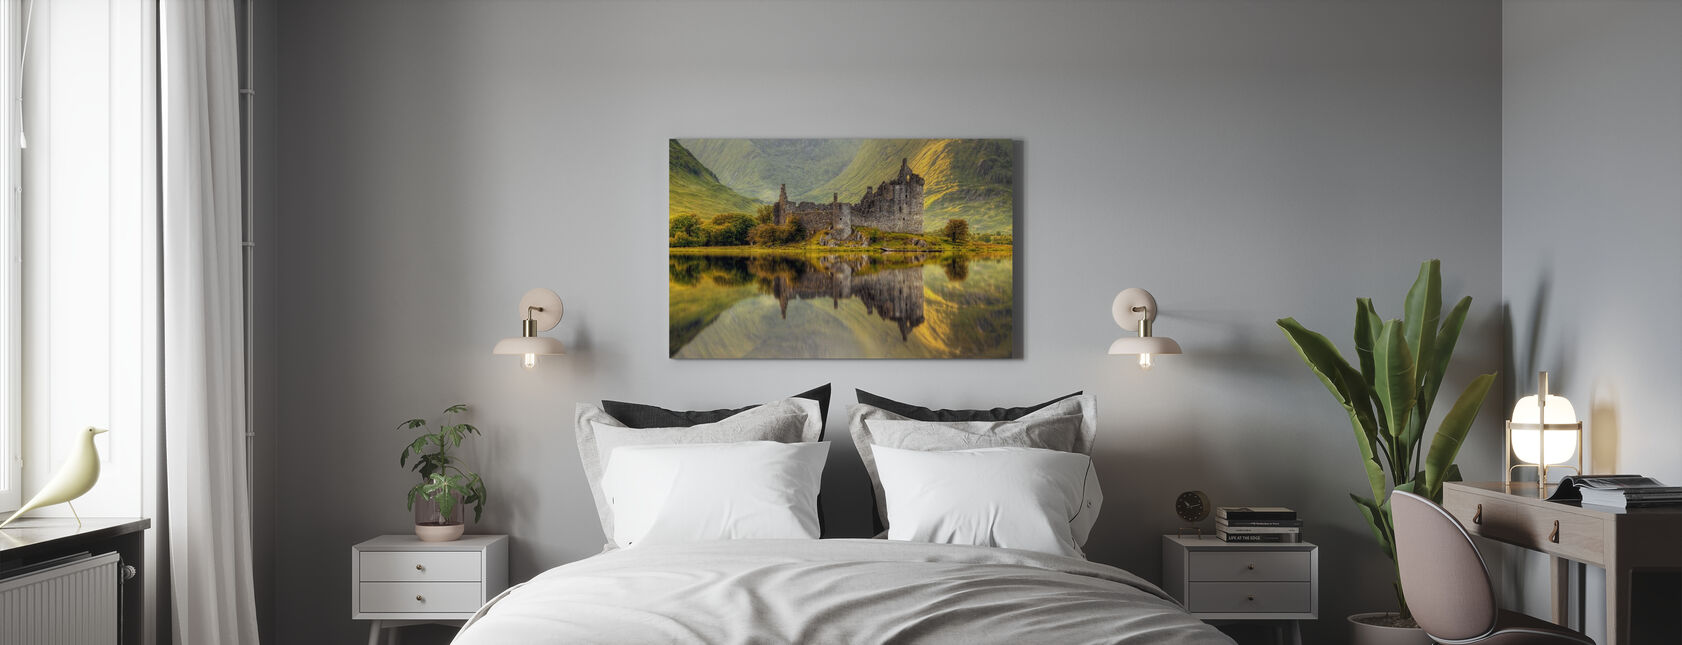 Kilchurn - Canvas print - Bedroom